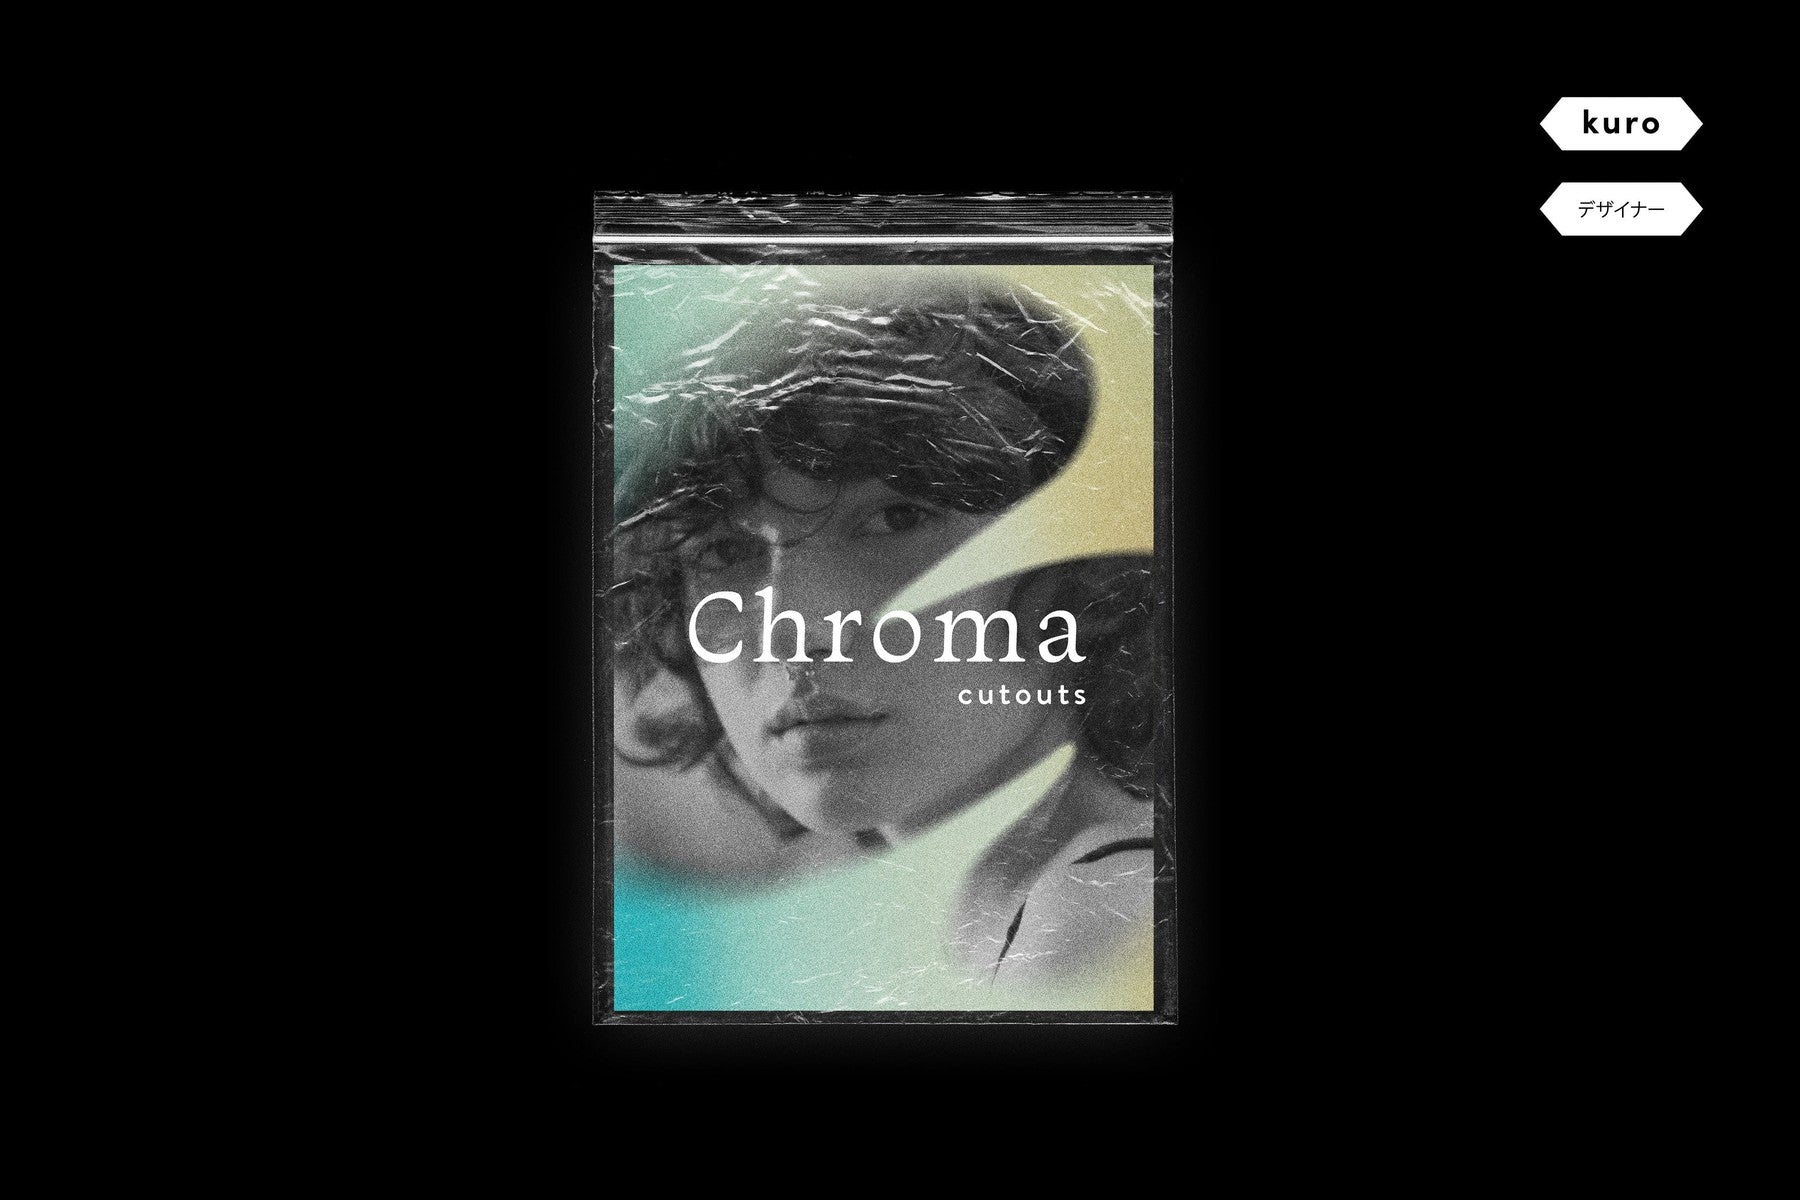 Chroma Cutouts Blurred Masks